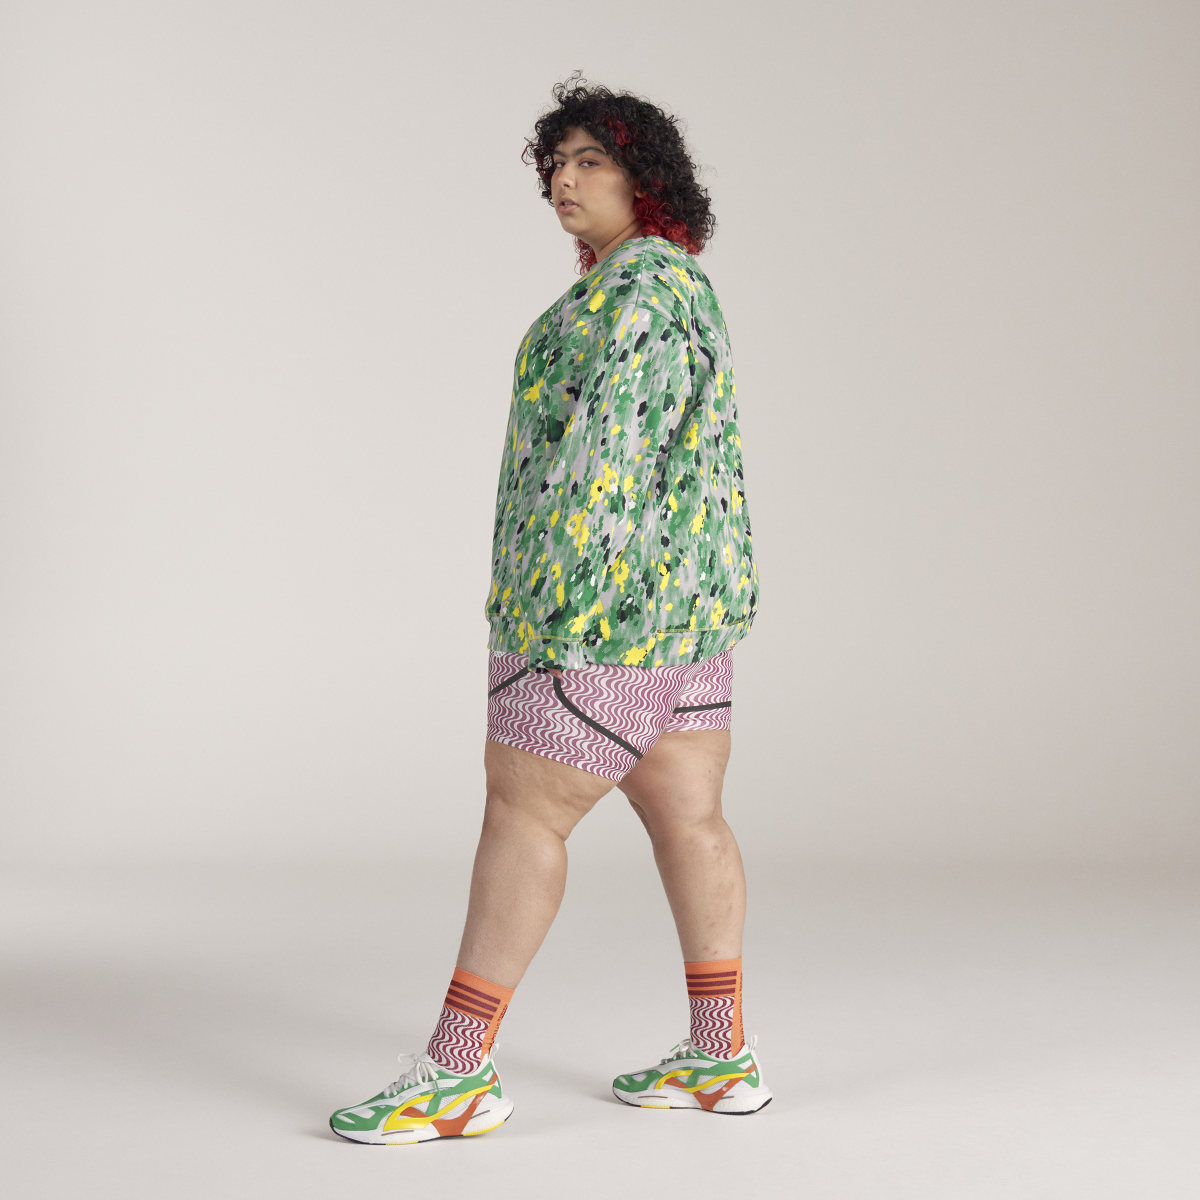 Adidas by Stella McCartney Floral Print Sweatshirt - Plus Size. 5